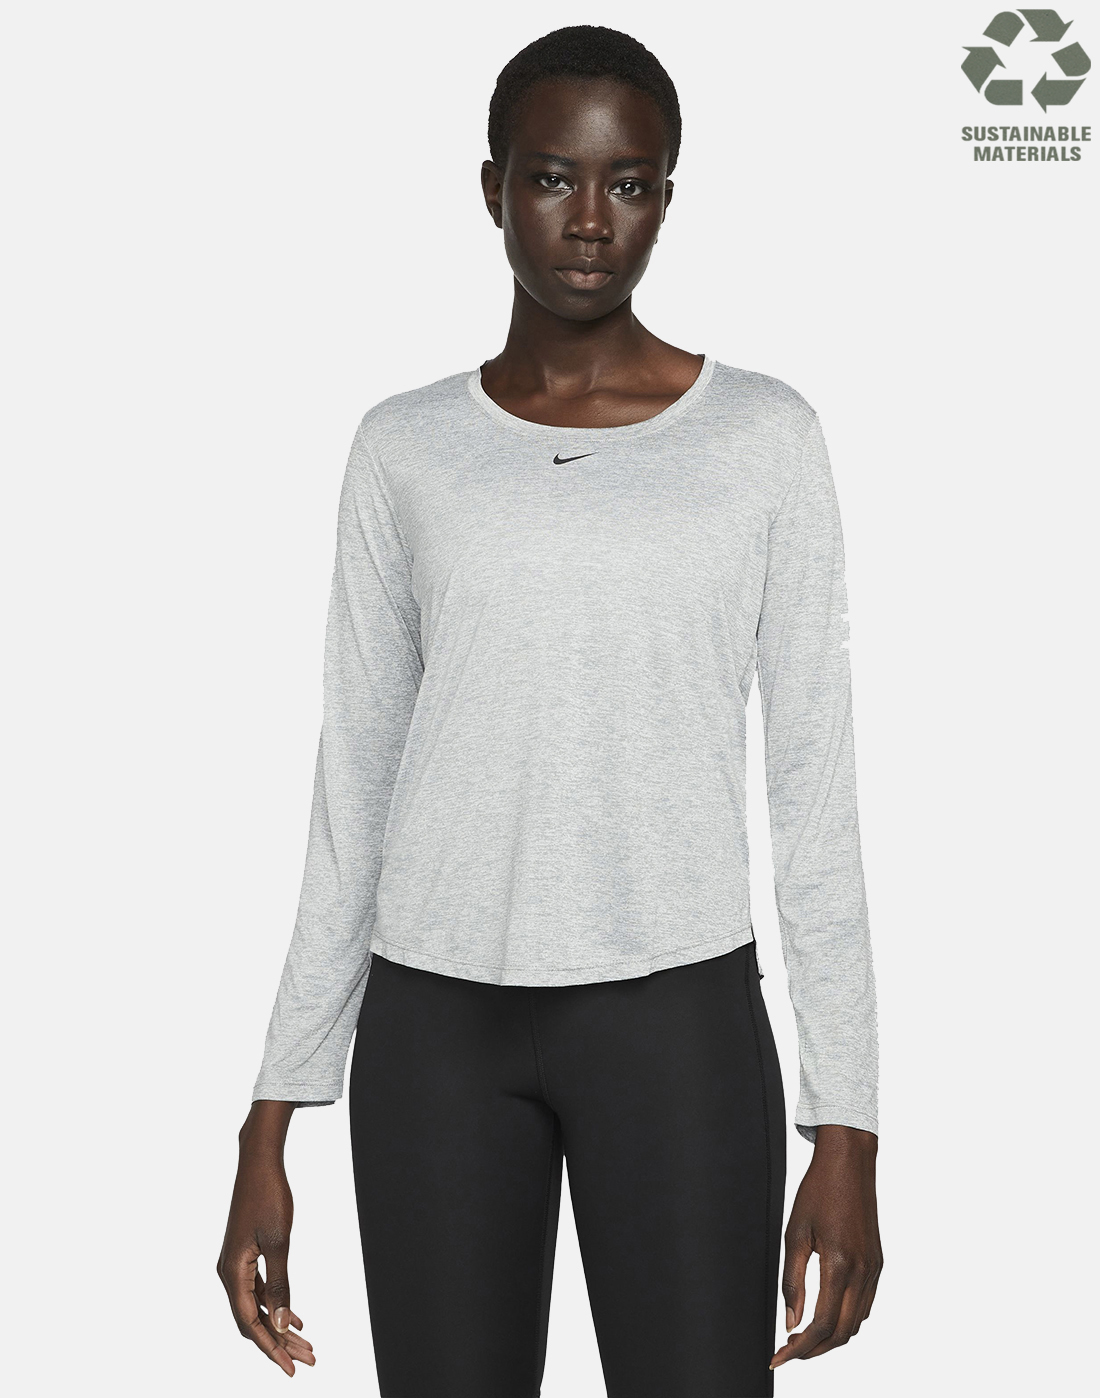 Nike Womens One Long Sleeves Top - Grey | Life Style Sports EU